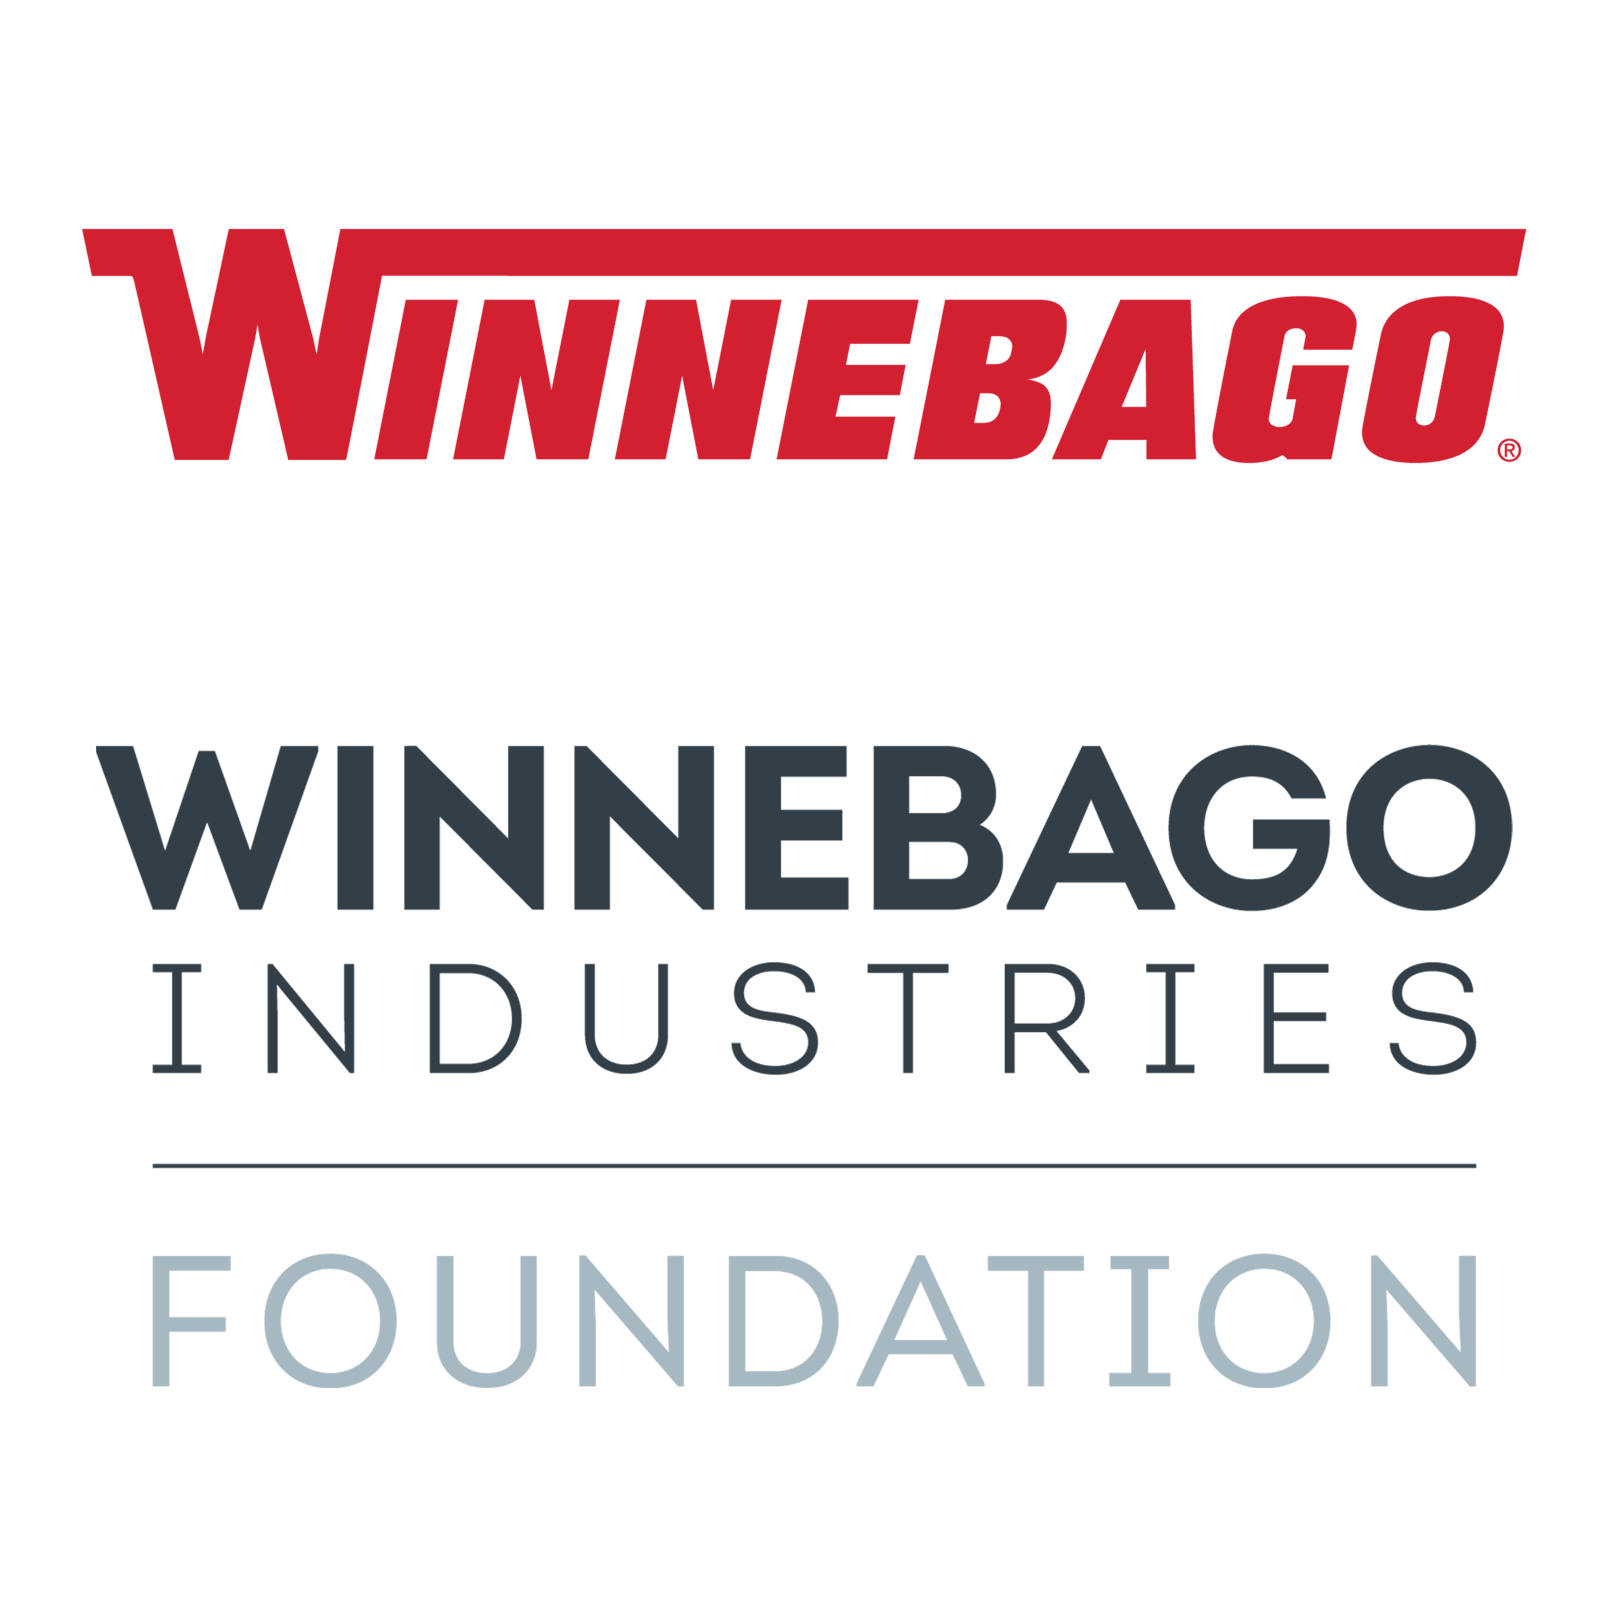 Two logos: above, a red Winnebago logo; below, a gray and blue "Winnebago Industries Foundation" logo